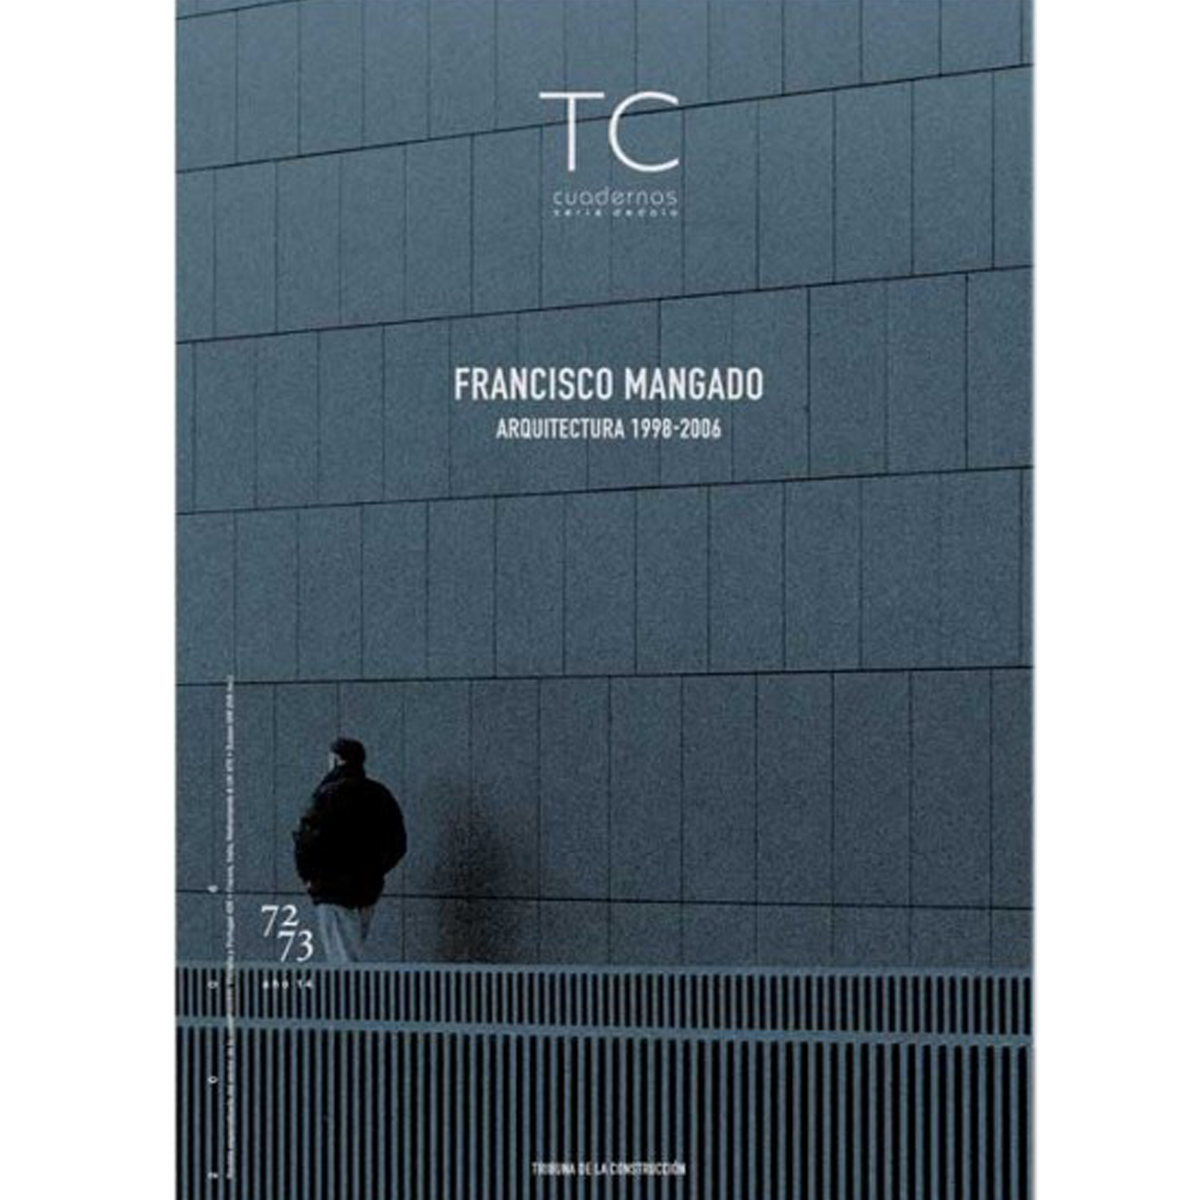 TC Cuadernos: Francisco Mangado